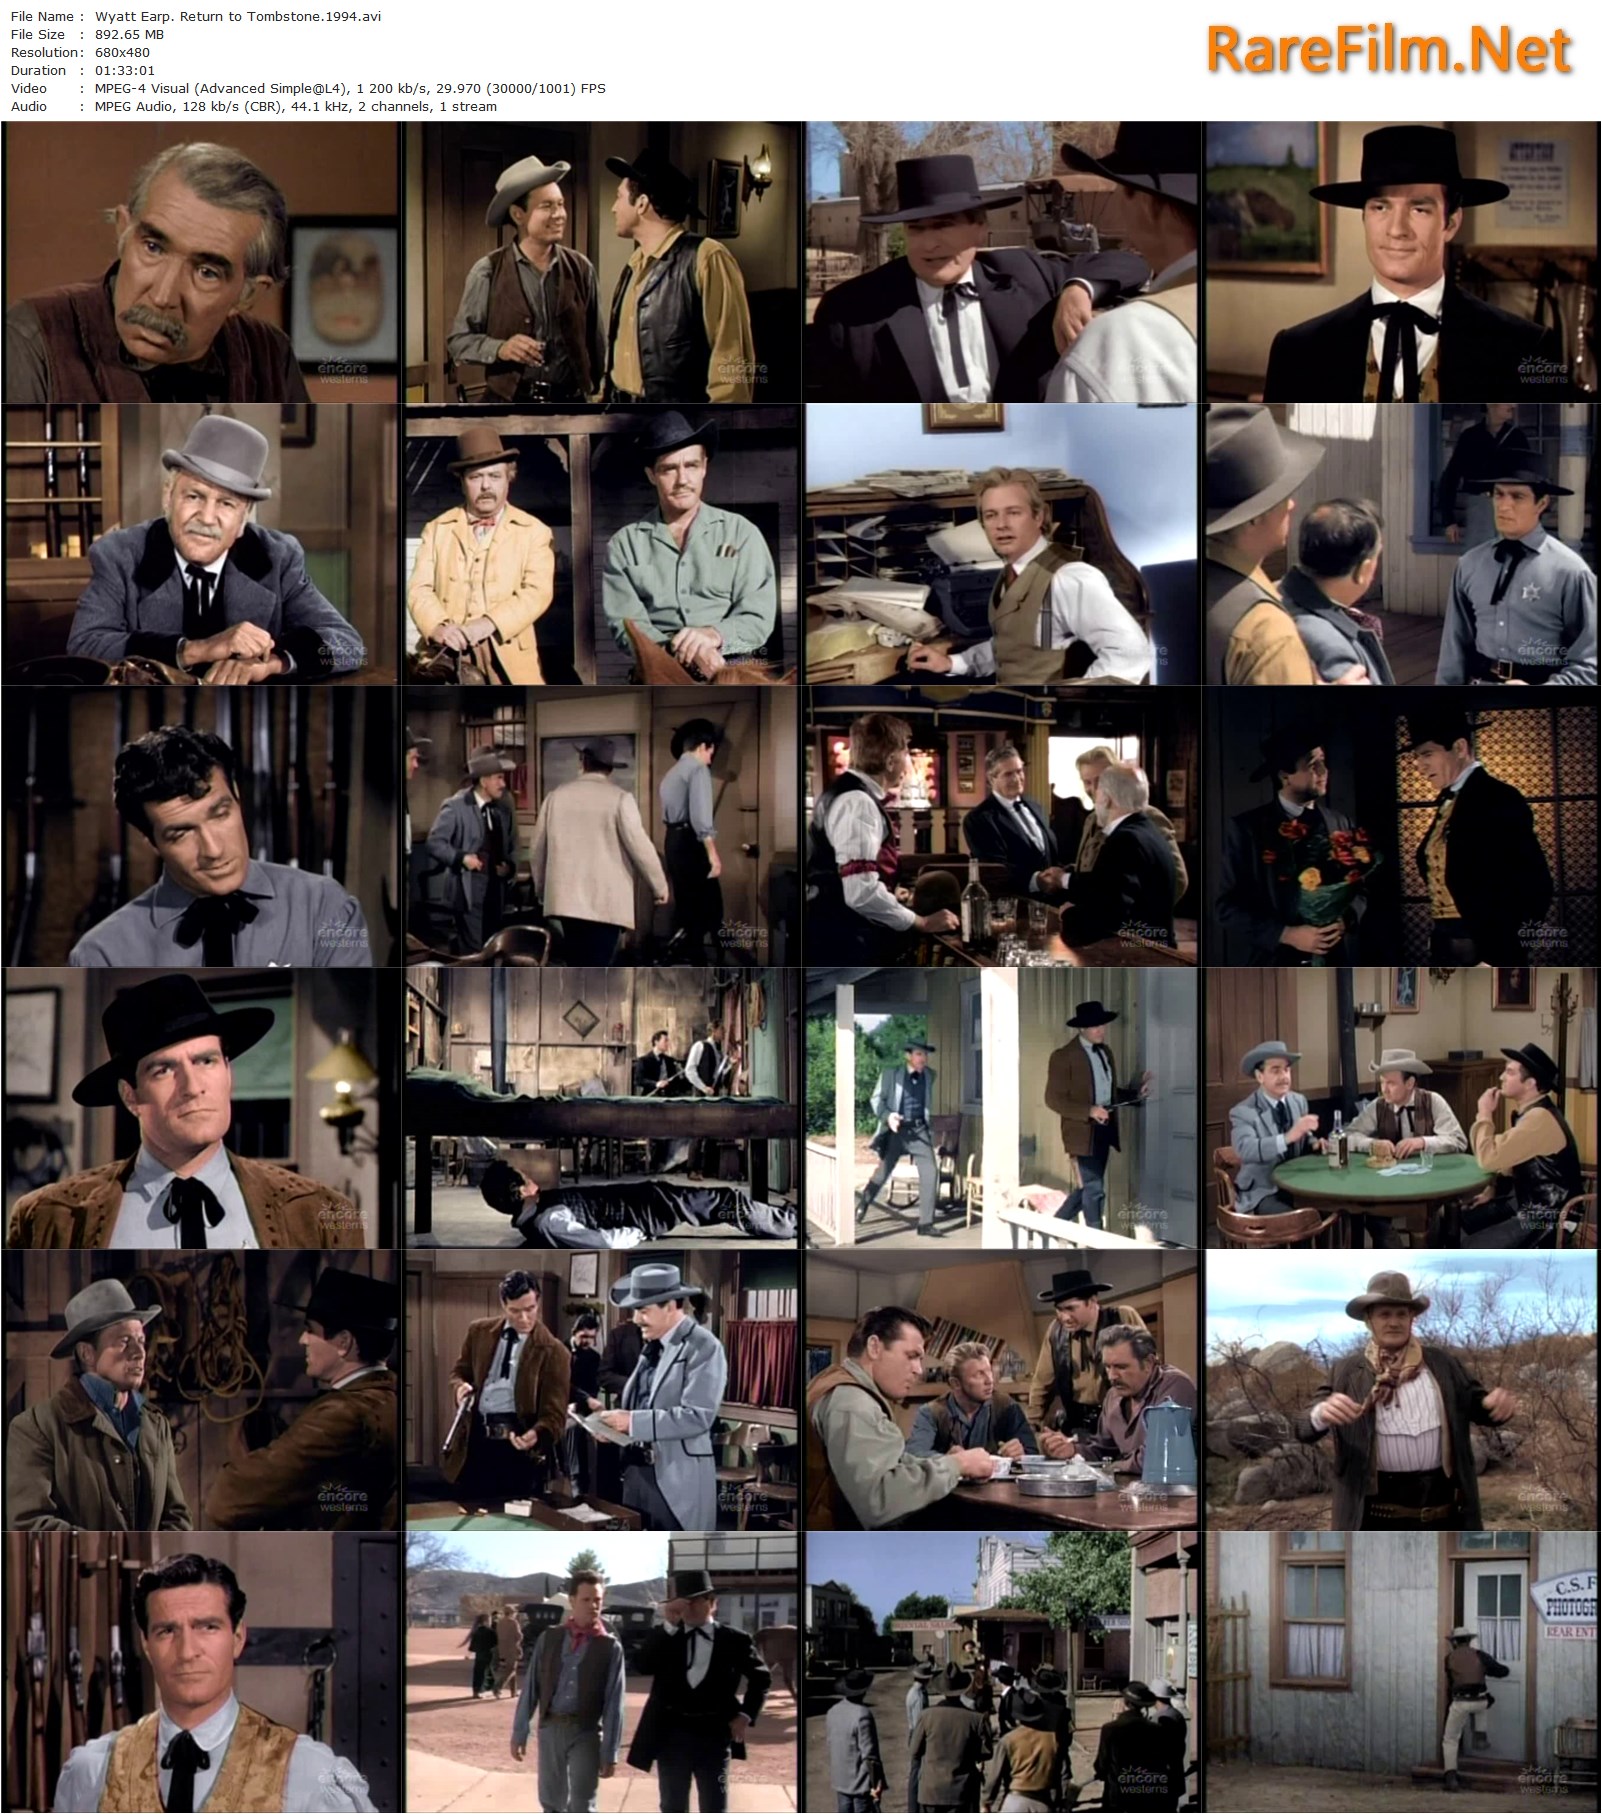 Wyatt Earp Return to Tombstone (1994) Paul Landres, Frank McDonald